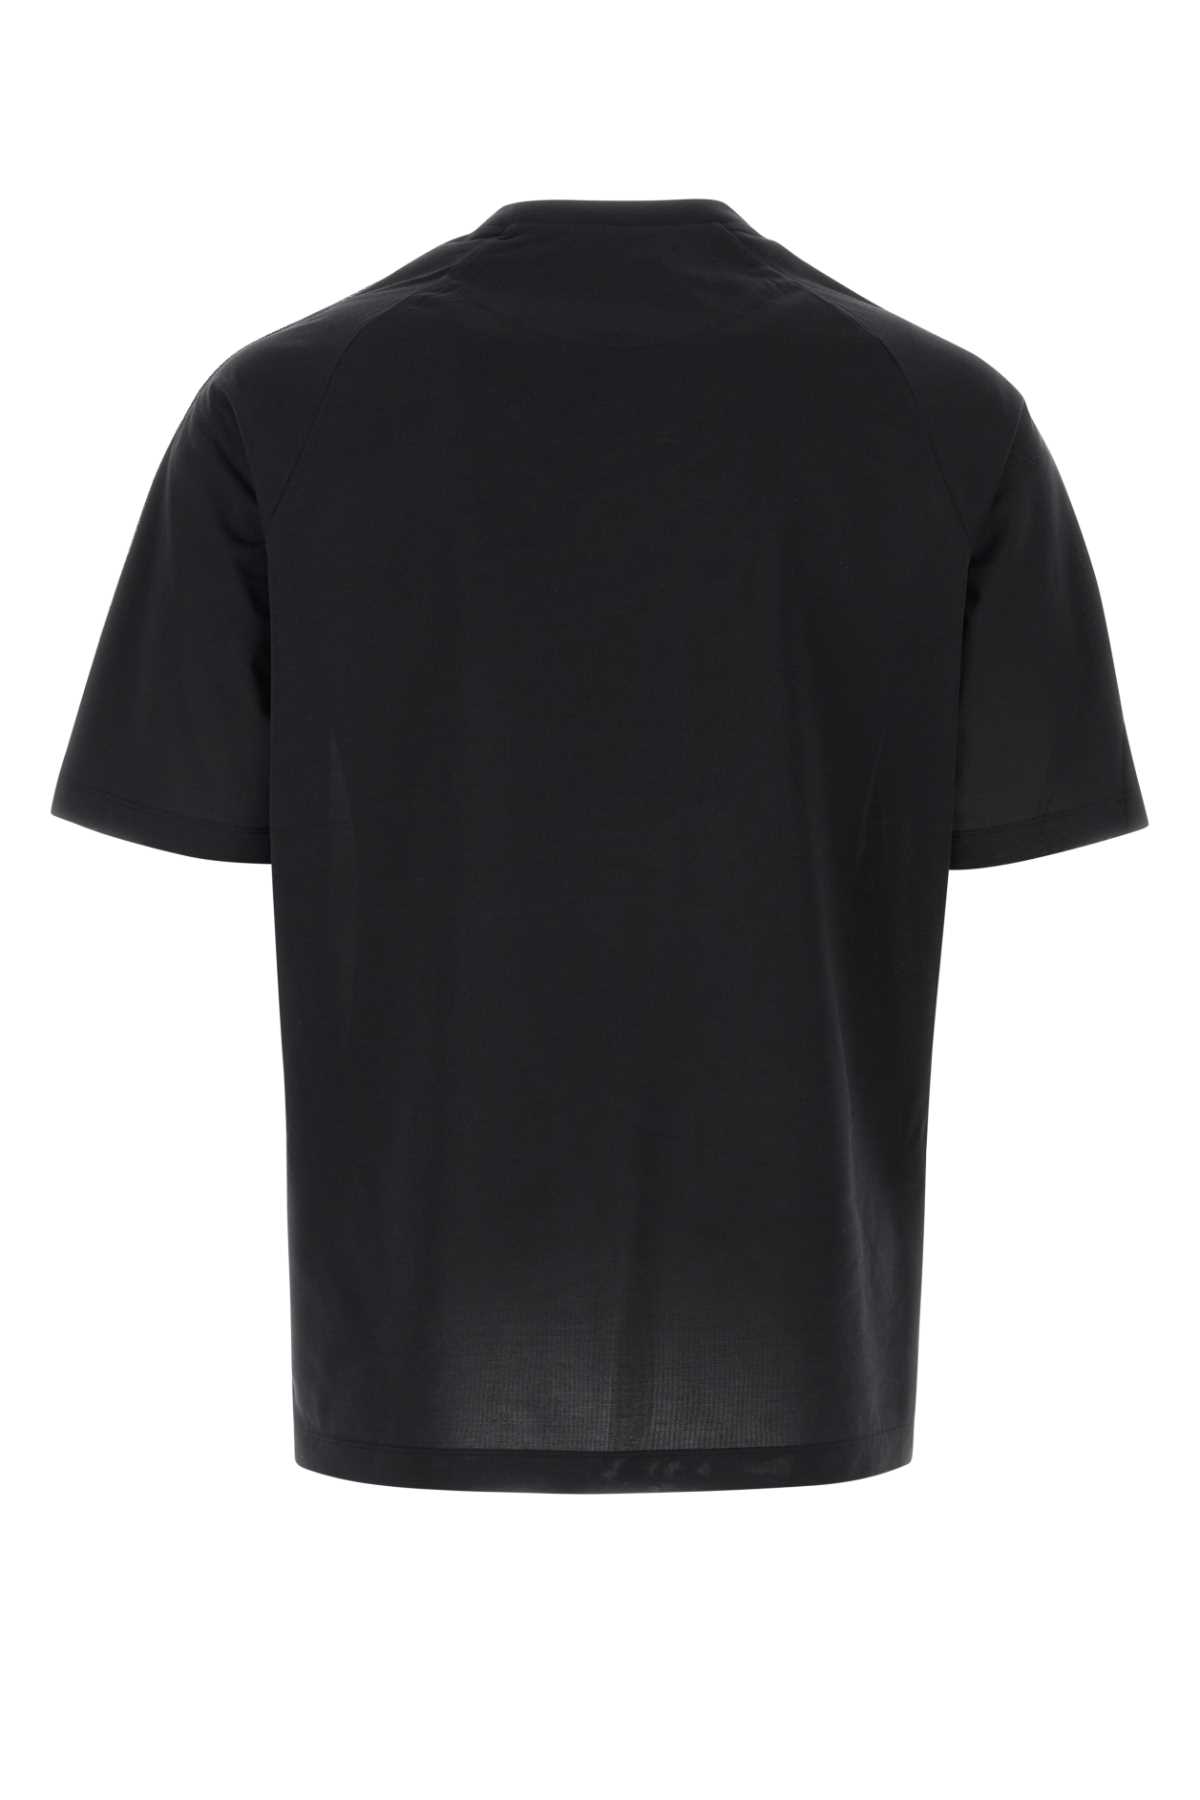 Y-3 Black Cotton Blend Oversize T-shirt In Blackoffwhite